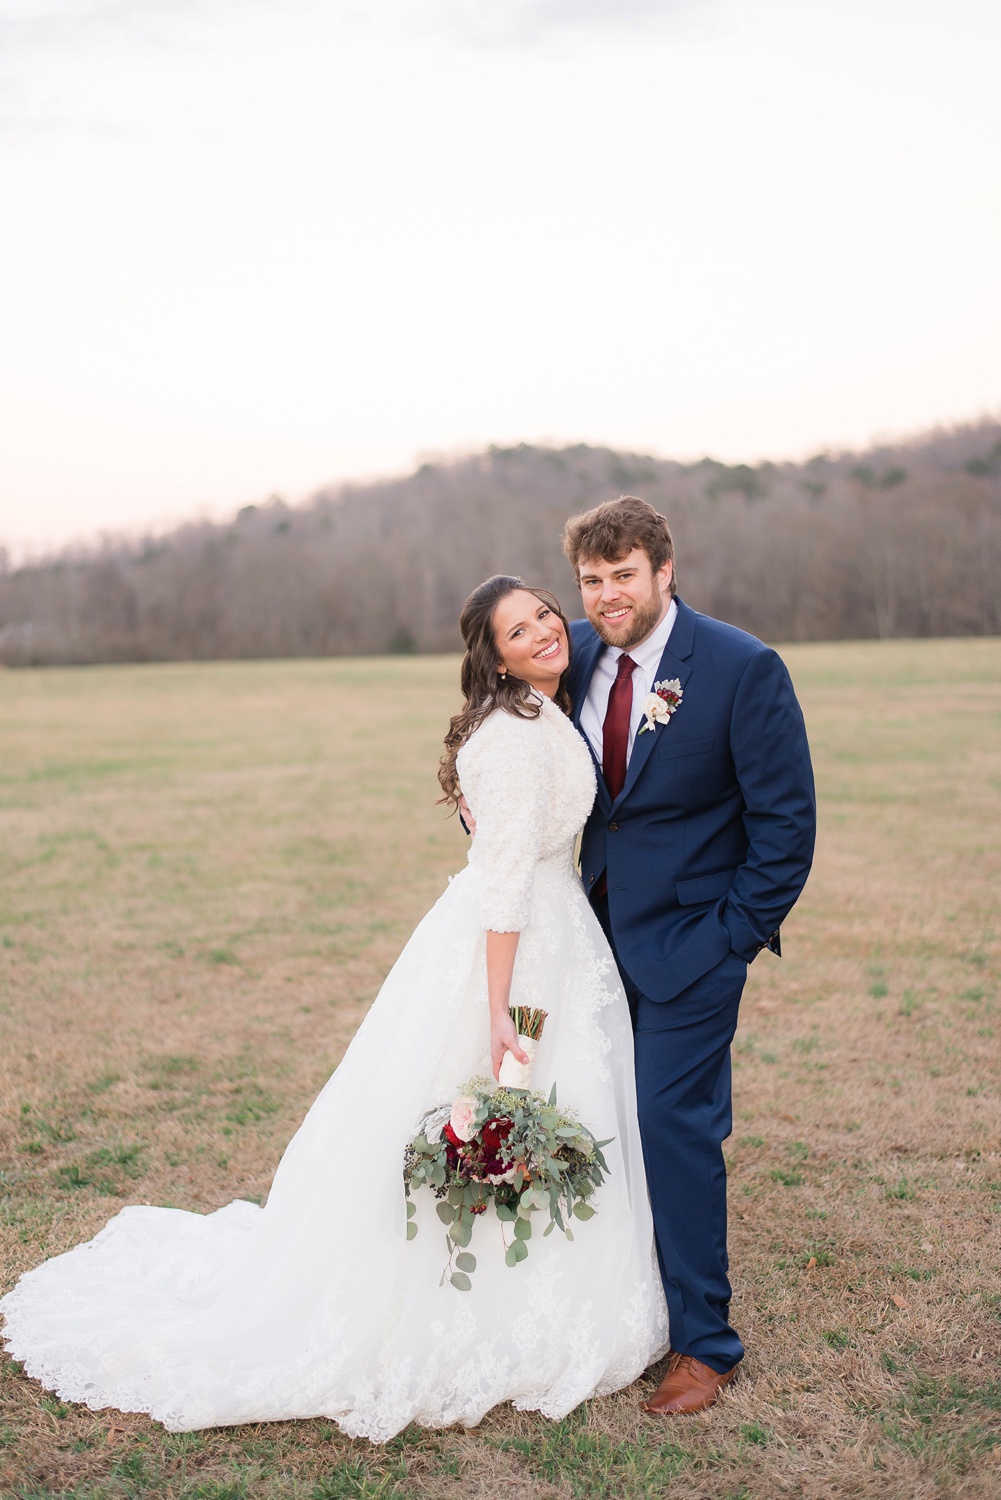 Mathews Manor Winter Wedding | Birmingham Alabama Wedding Photographer_0056.jpg